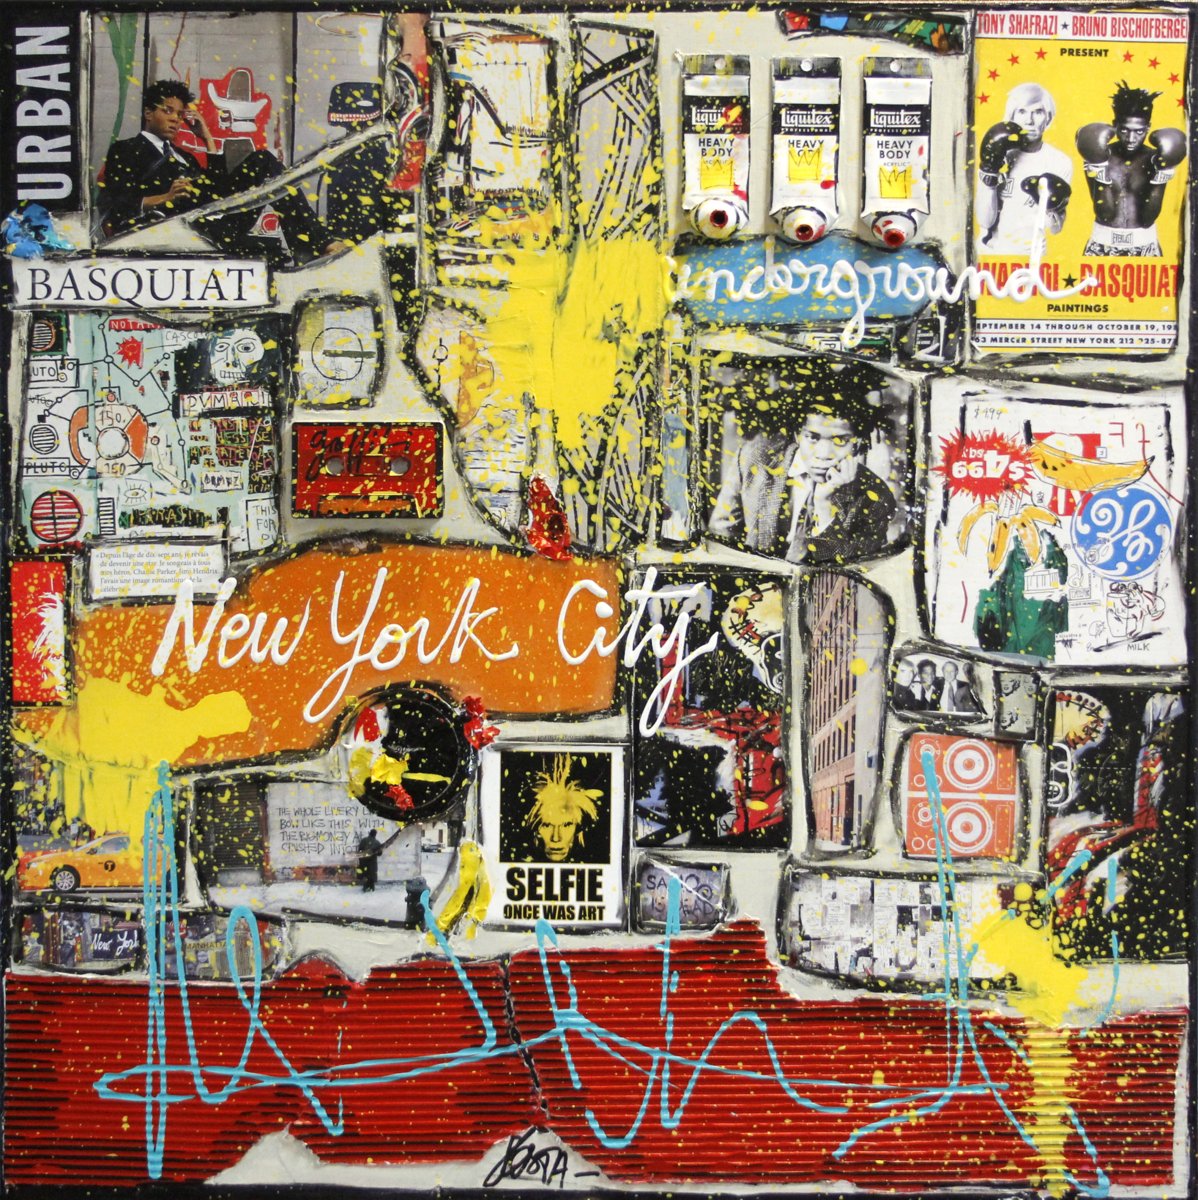 basquiat, collage Tableau Contemporain, NY underground (Tribute to Basquiat). Sophie Costa, artiste peintre.